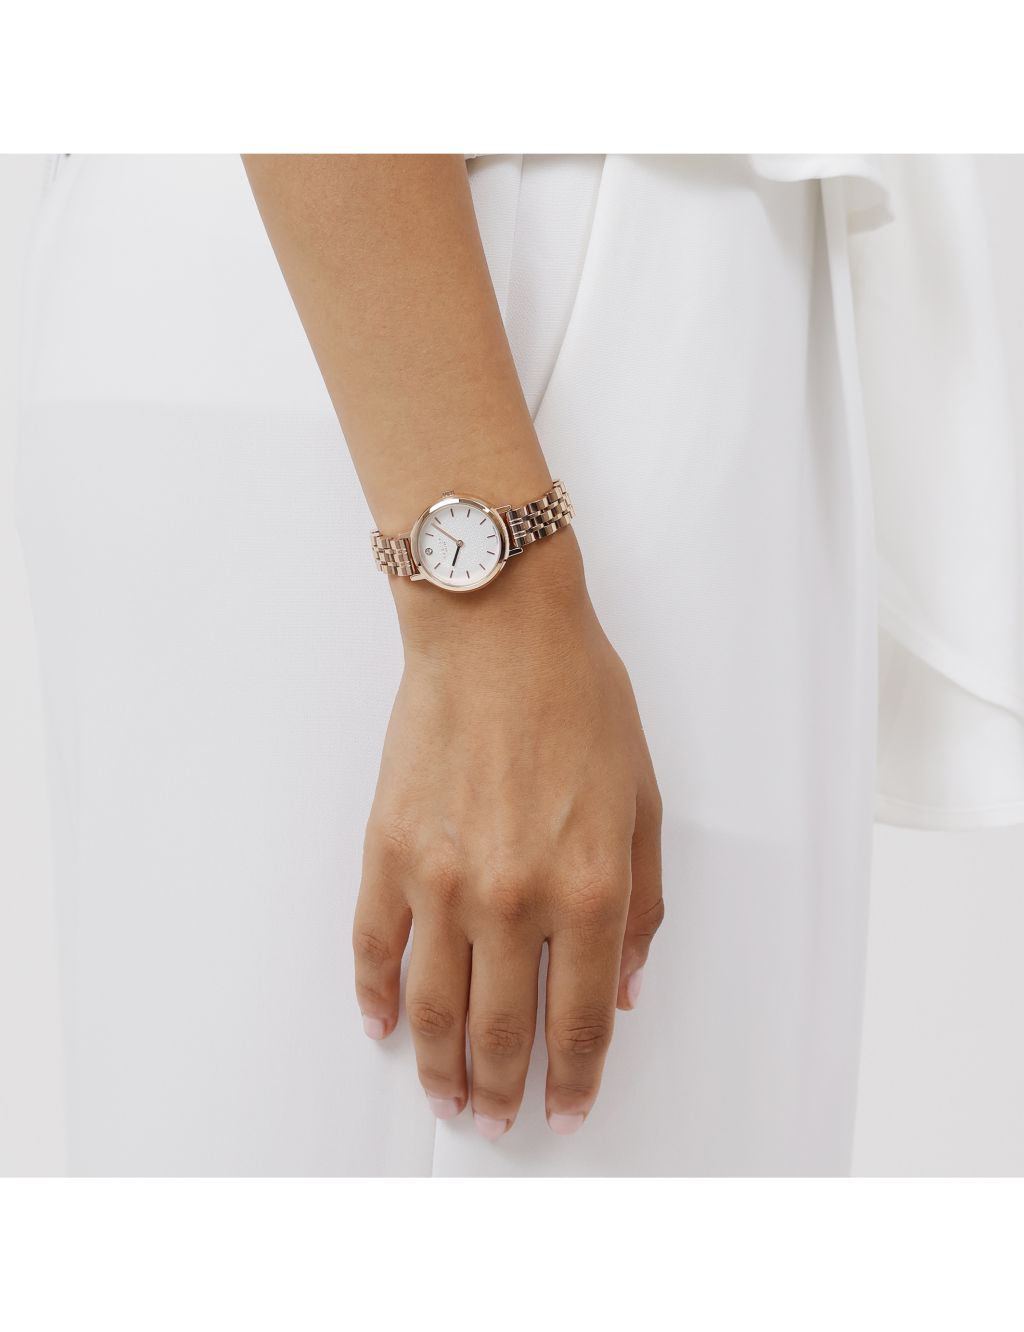 Radley Diamond Street Watch & Bracelet Gift Set image 2